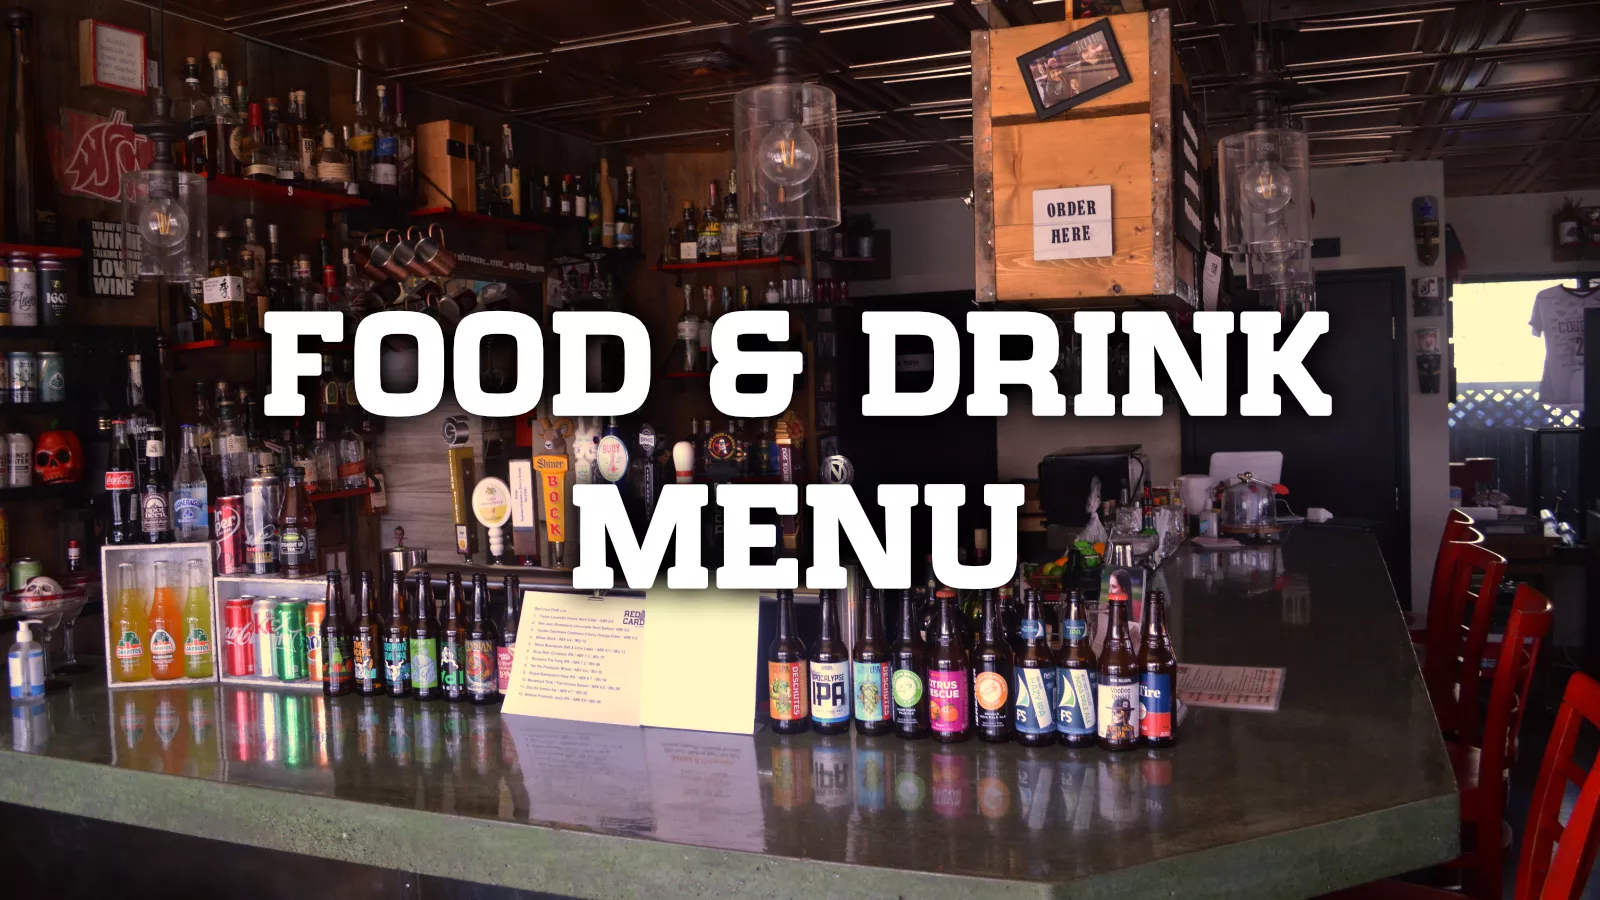 Red Card Pub and Tex Mex Taco Bar. Tex Mex, beer, and margaritas menu